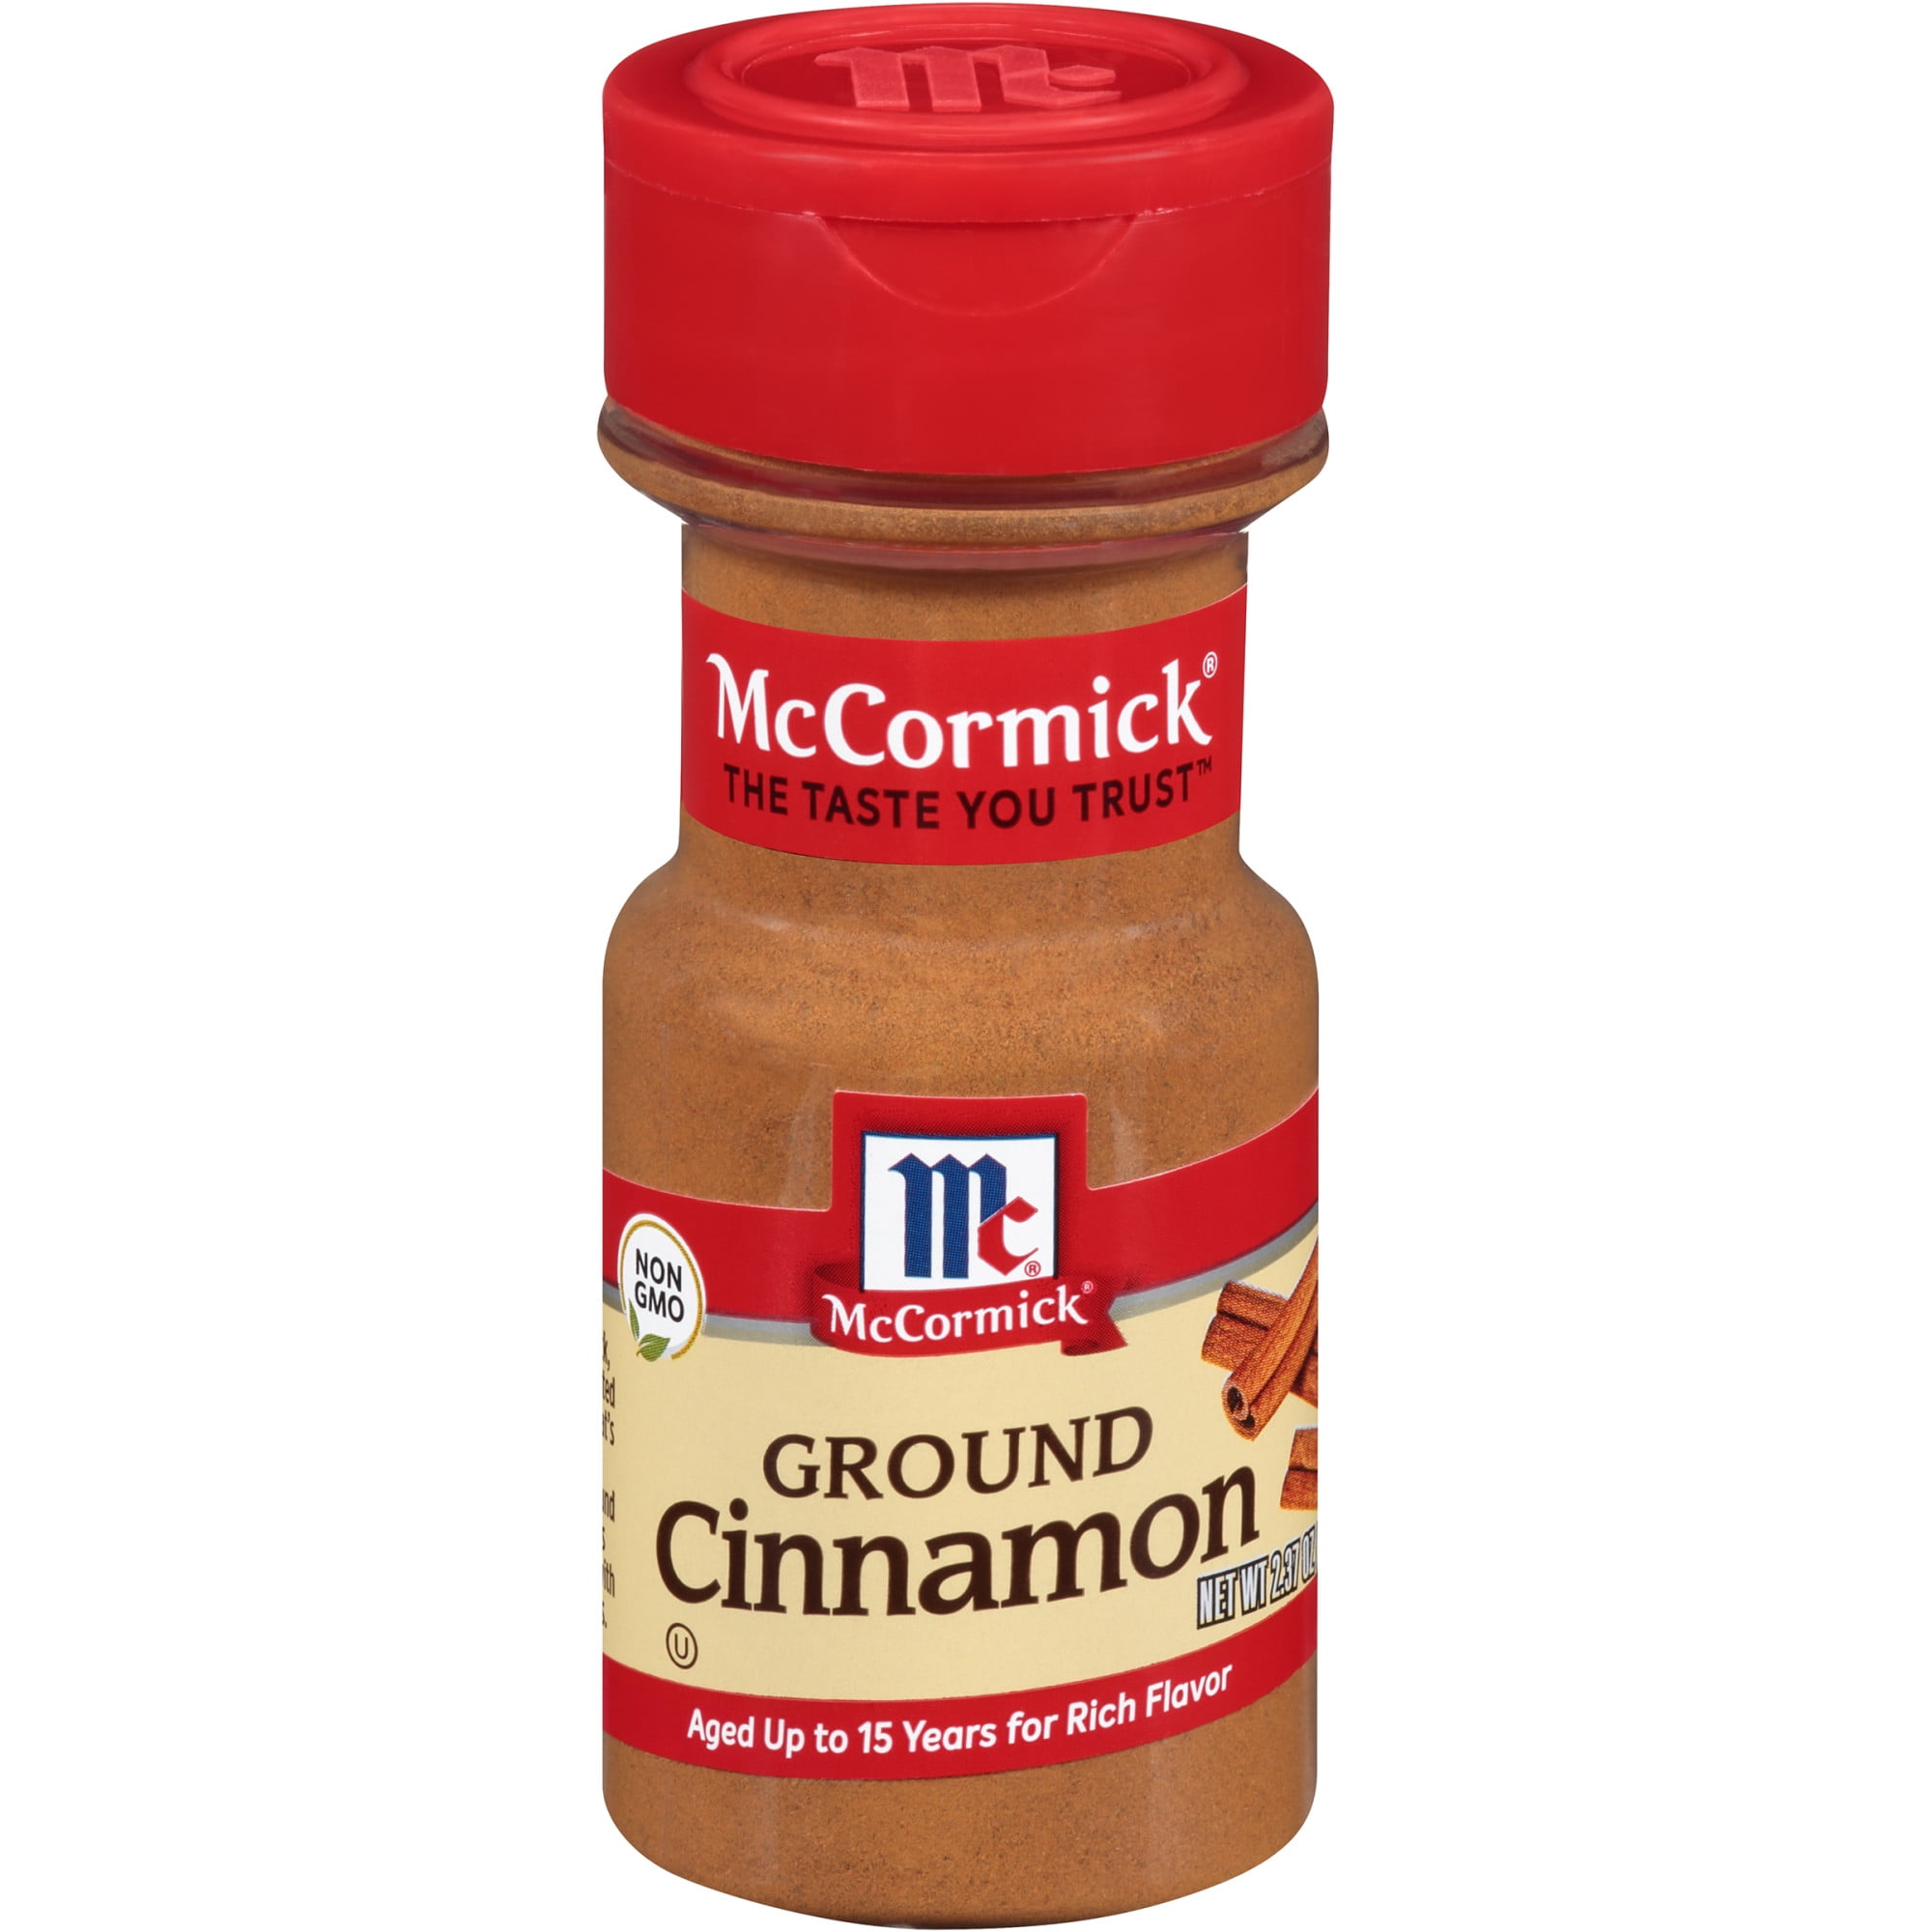 McCormick Cinnamon Ground, 2.37 oz Walmart Inventory Checker